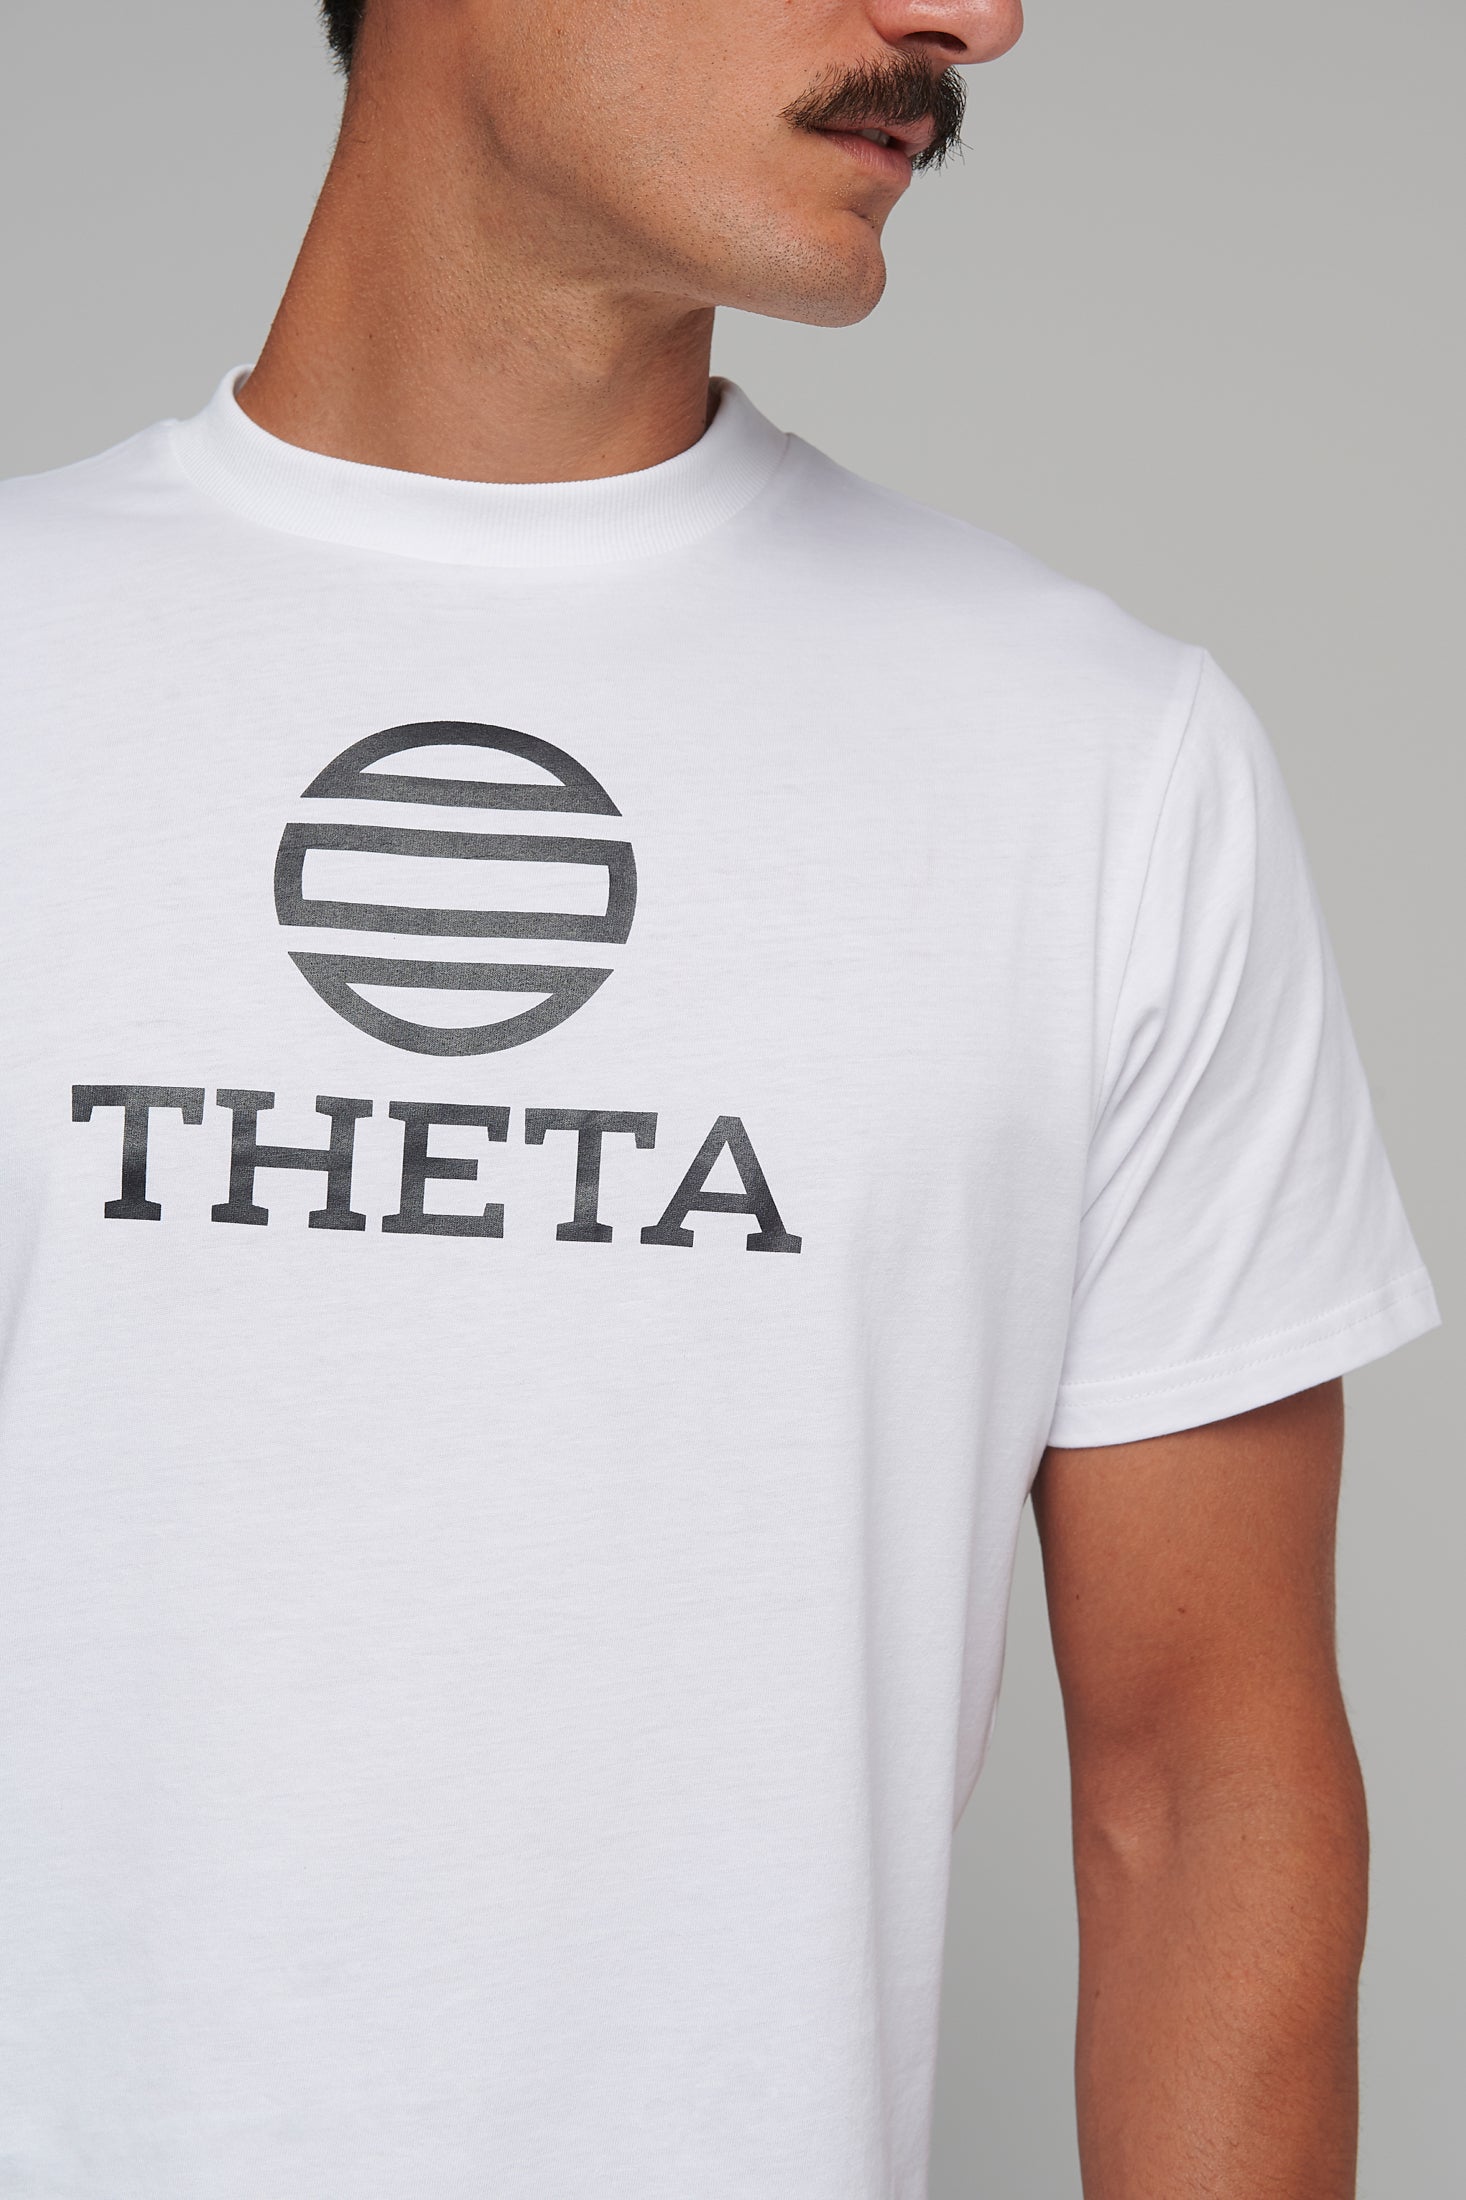 "Theta The beginning" logo T-shirt / White or Black.